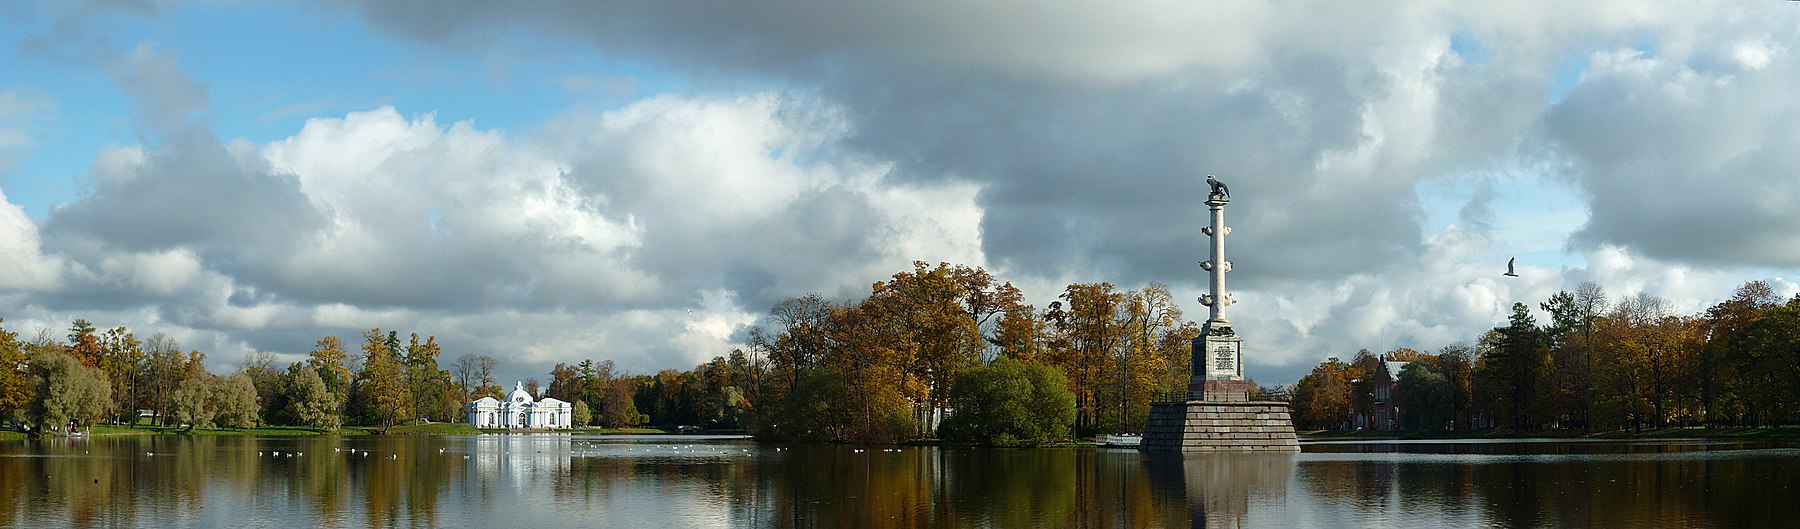 Ҙур быуа, Екатерина паркы, Пушкин ҡалаһы, ҡатнашыусы Utro boyarskogo фотоһы, CC BY-SA 3.0 лицензияһы